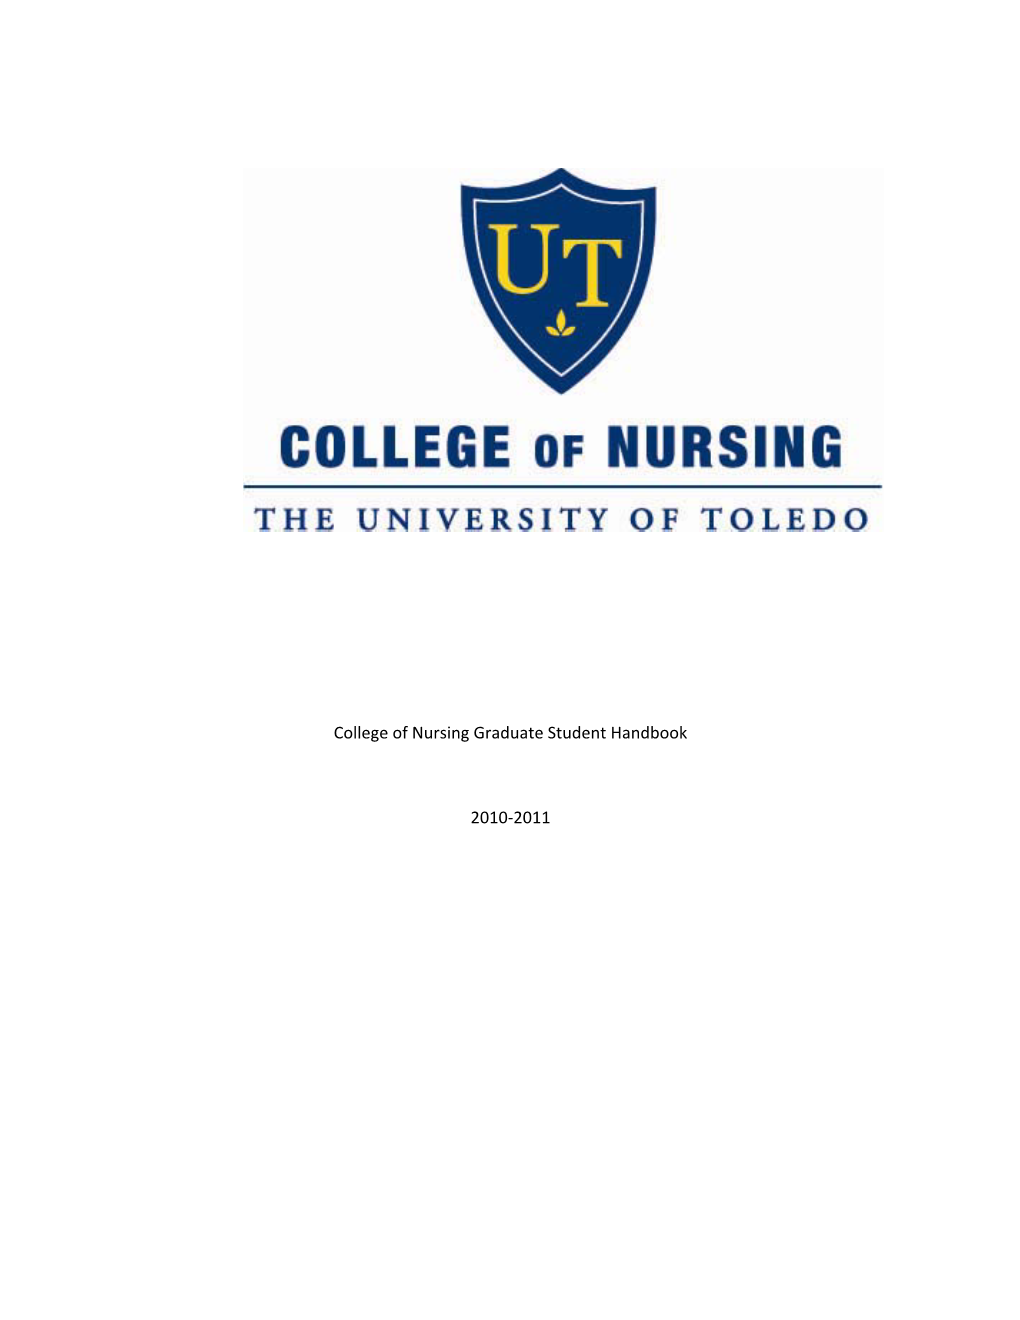 College of Nursing Graduate Student Handbook 2010-2011